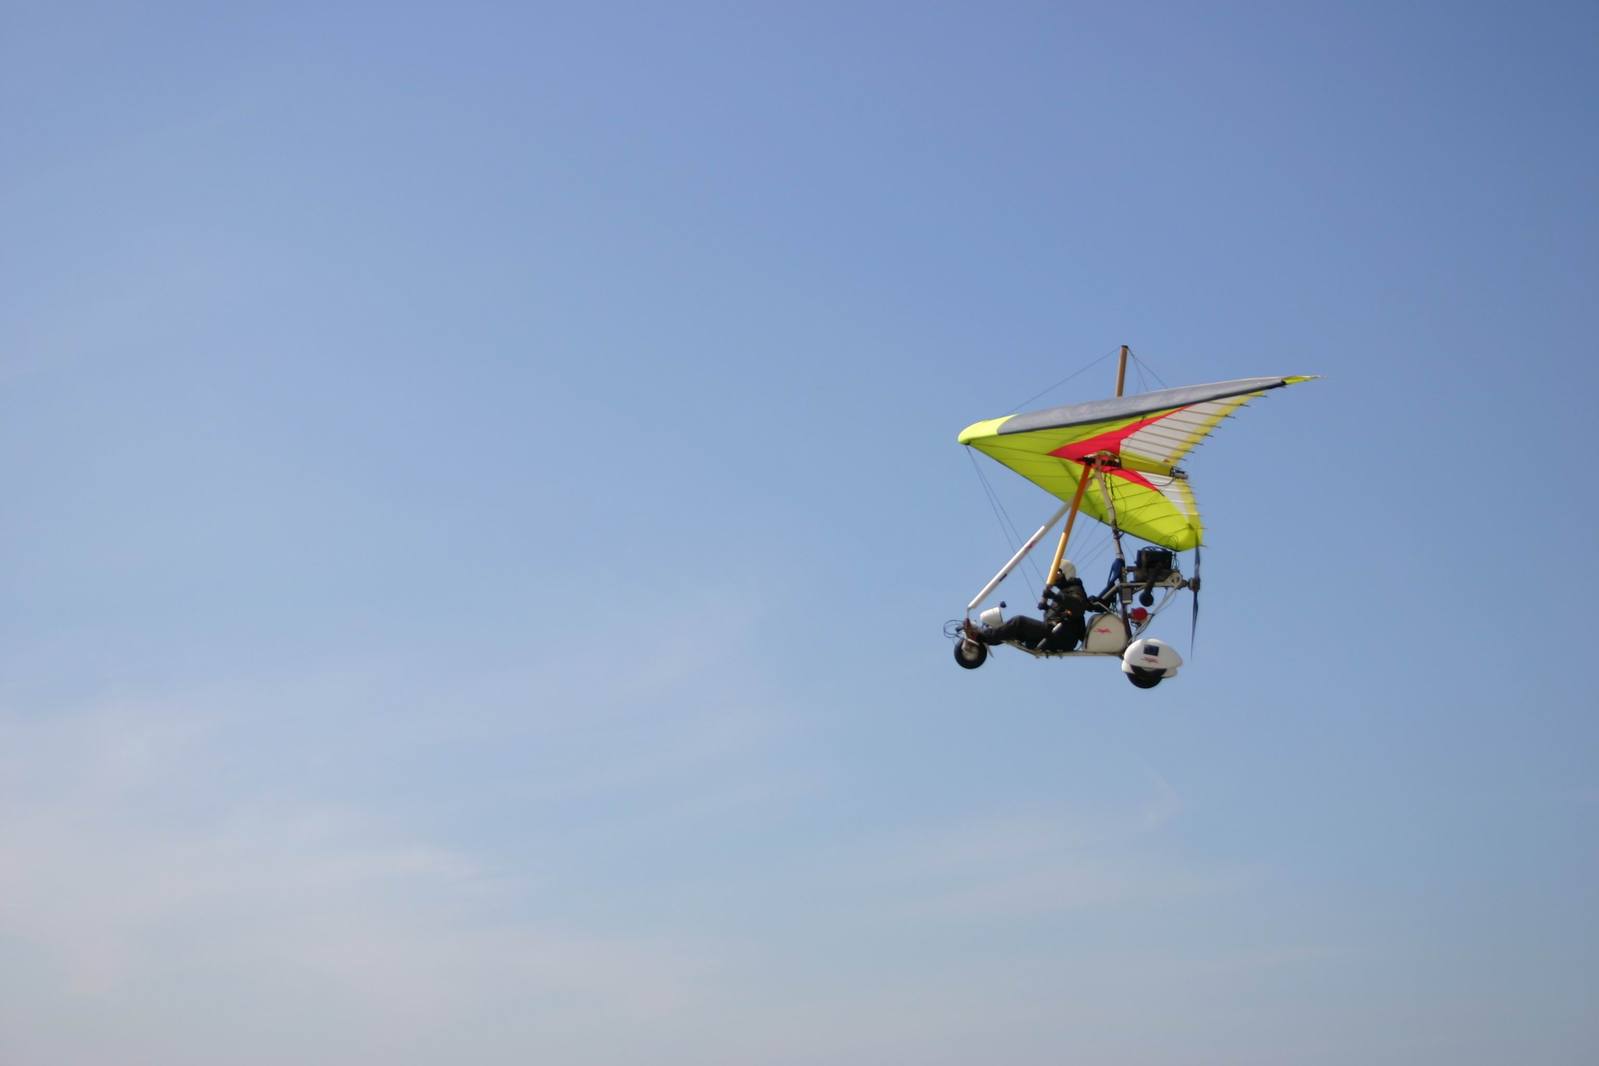 a man flying a kite on the beach